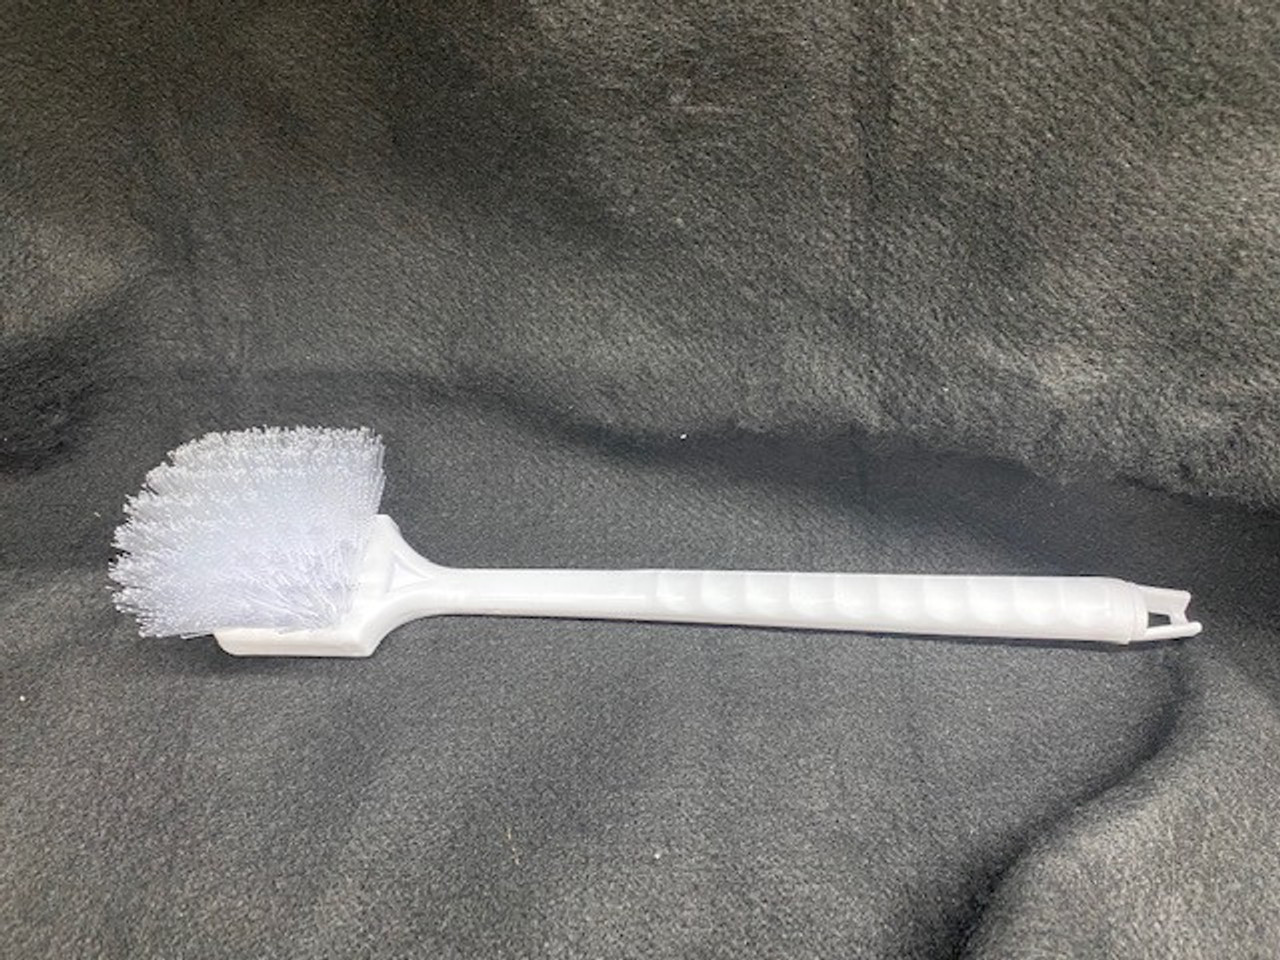 All-Purpose Scrub Brush